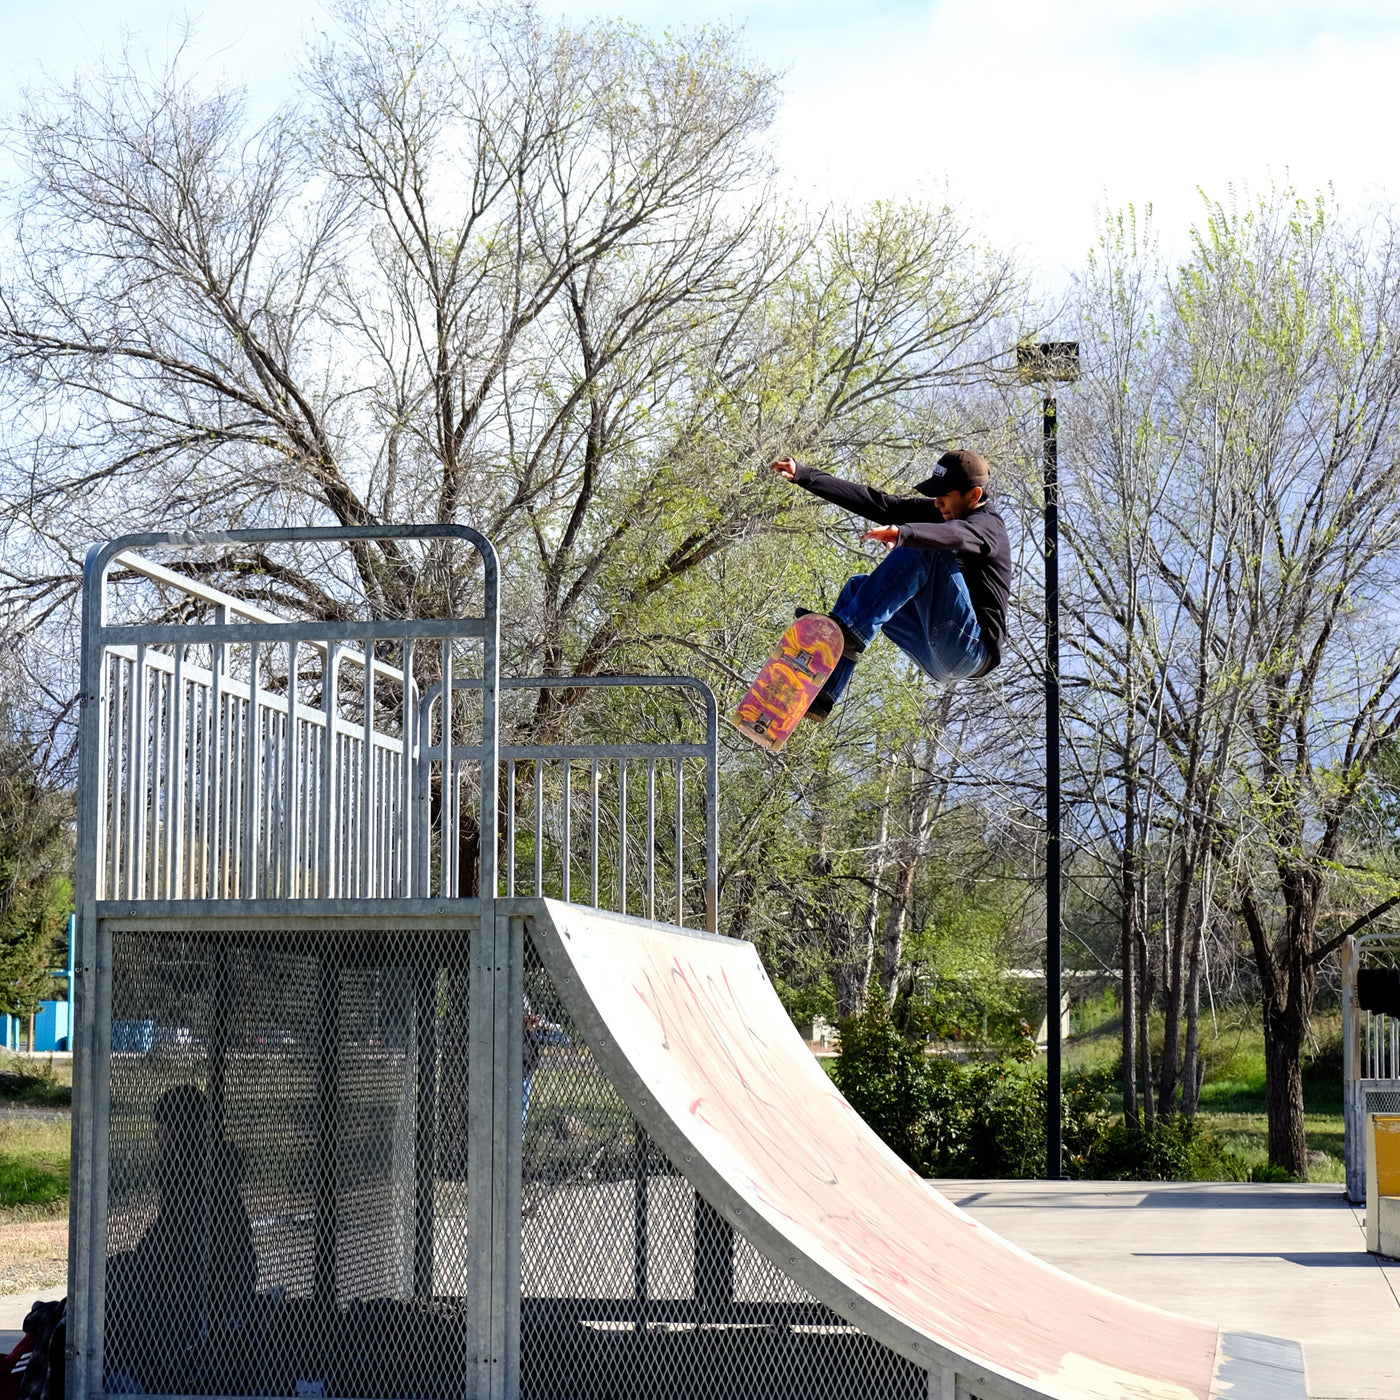 Daquon Cassaway skates a ramp in his Warm Springs Skatepark tee